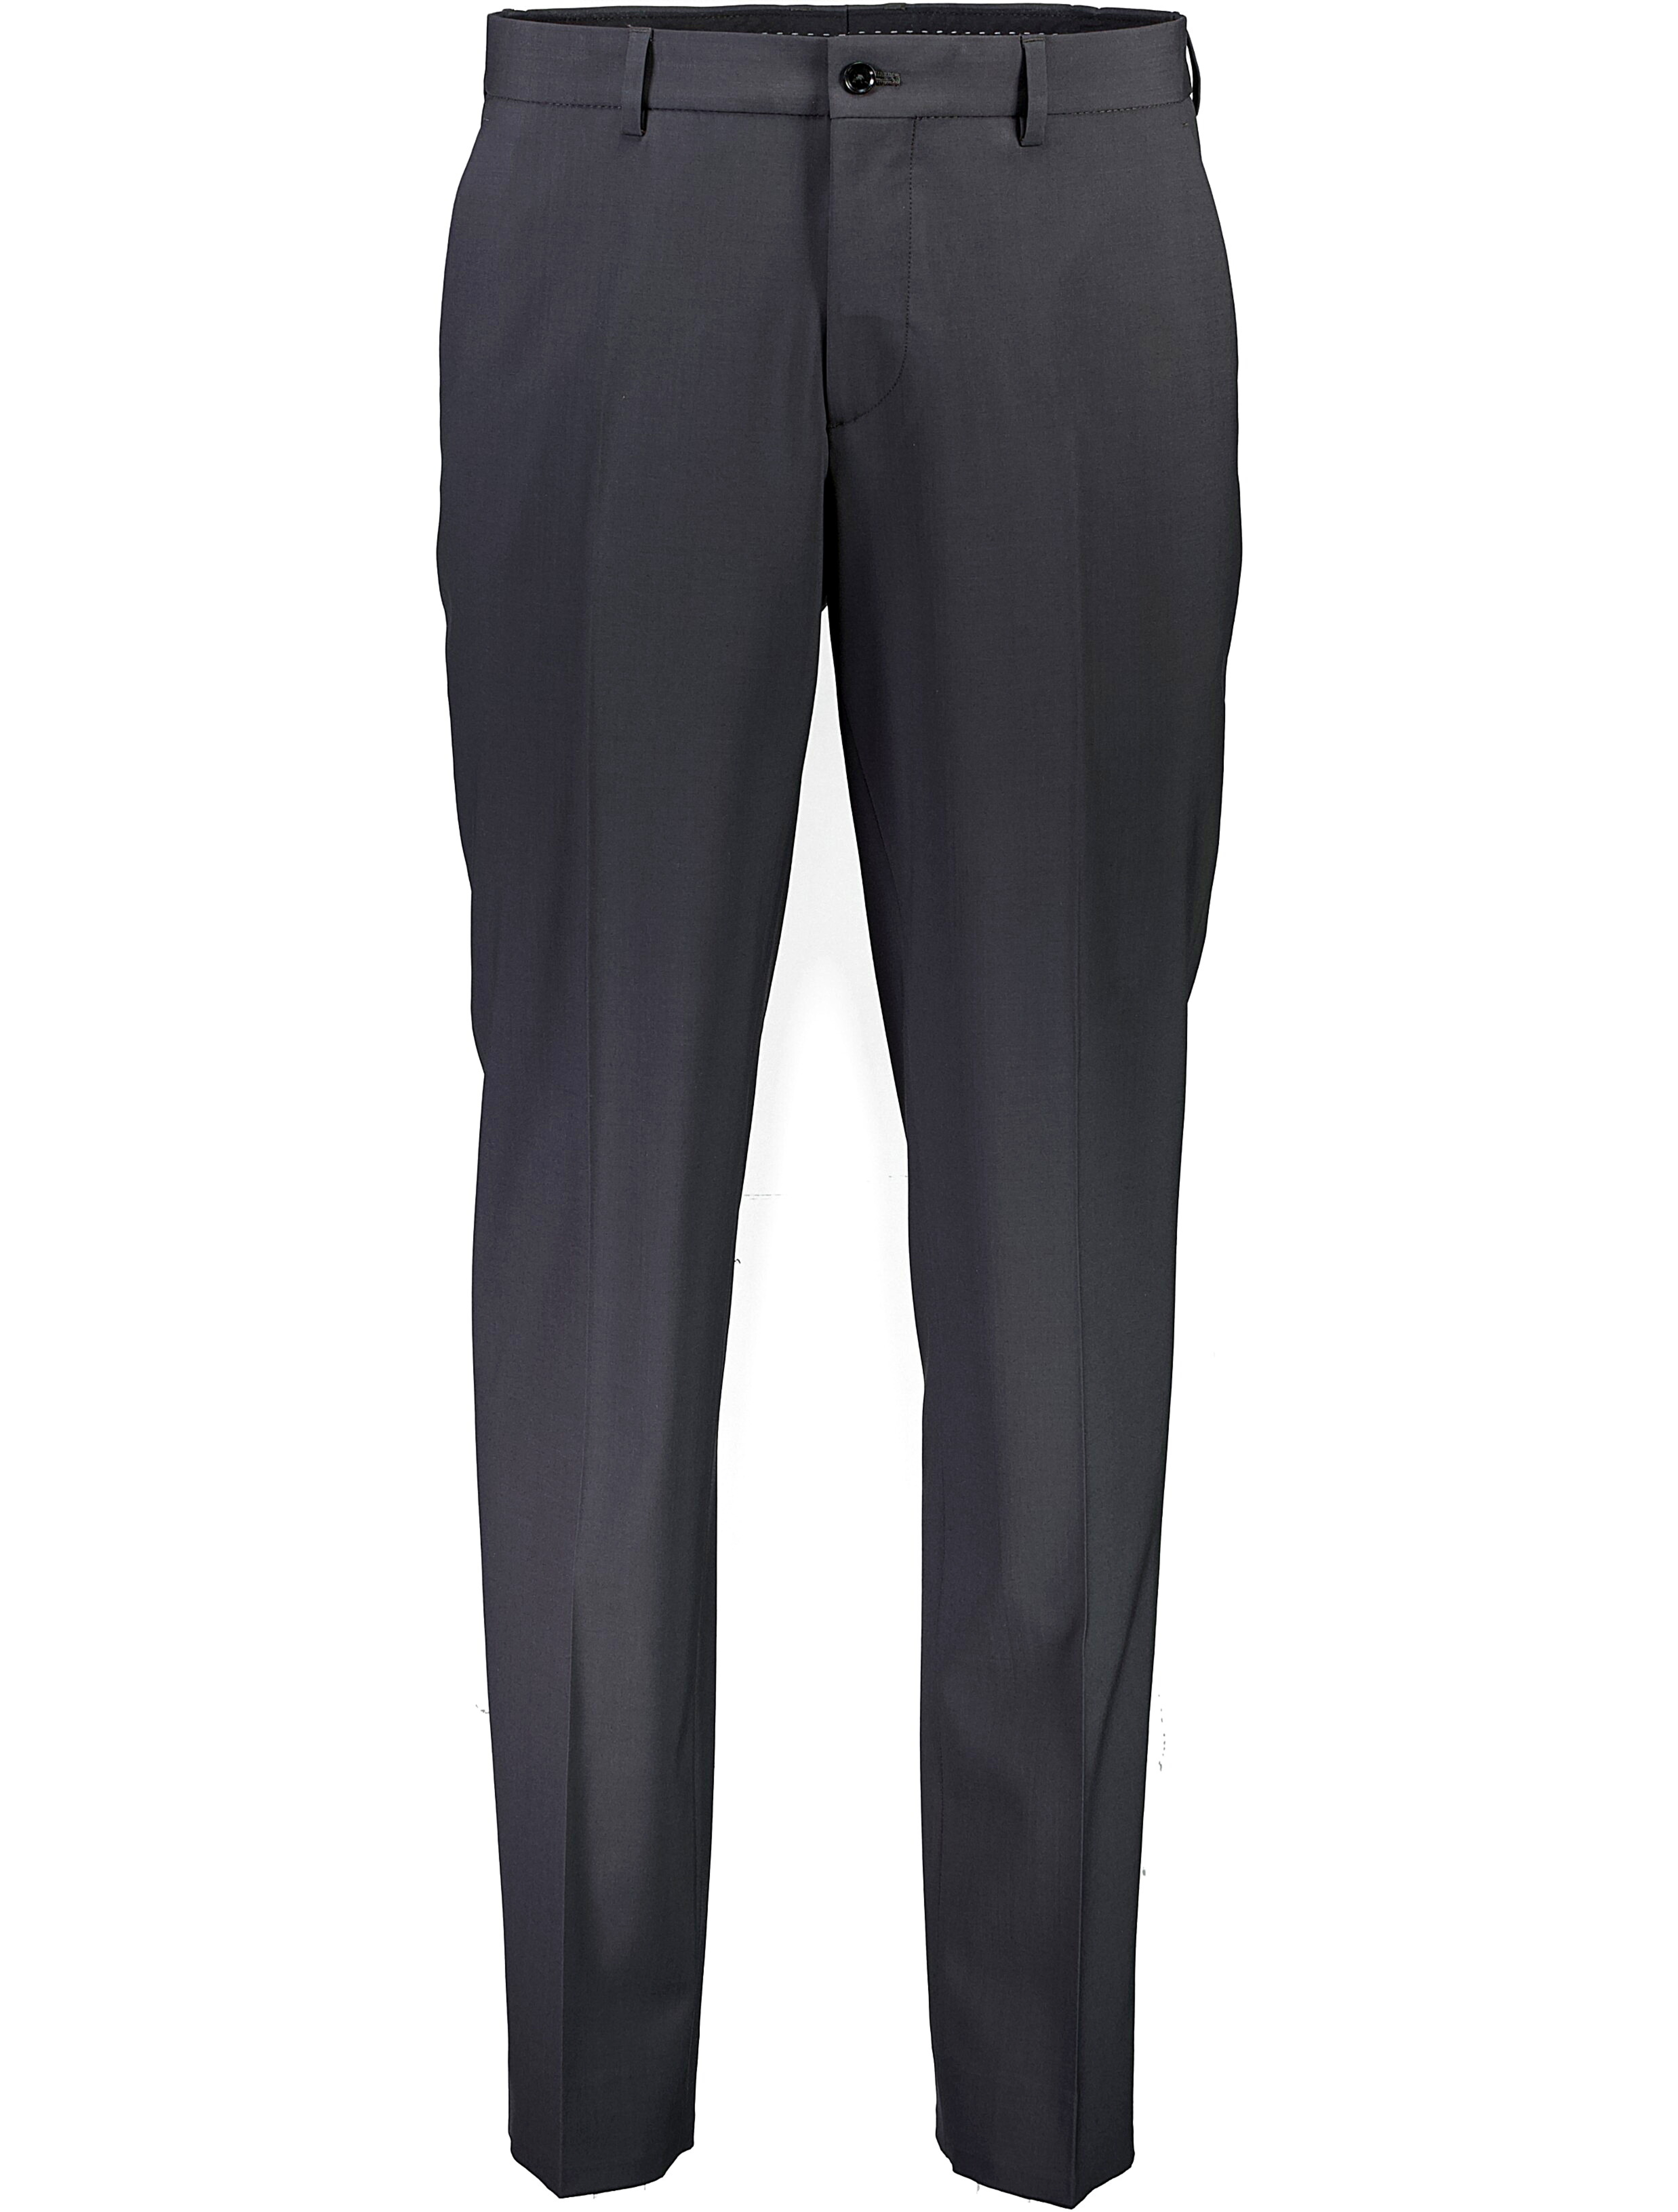 Lindbergh Suit Pants grey / dk grey